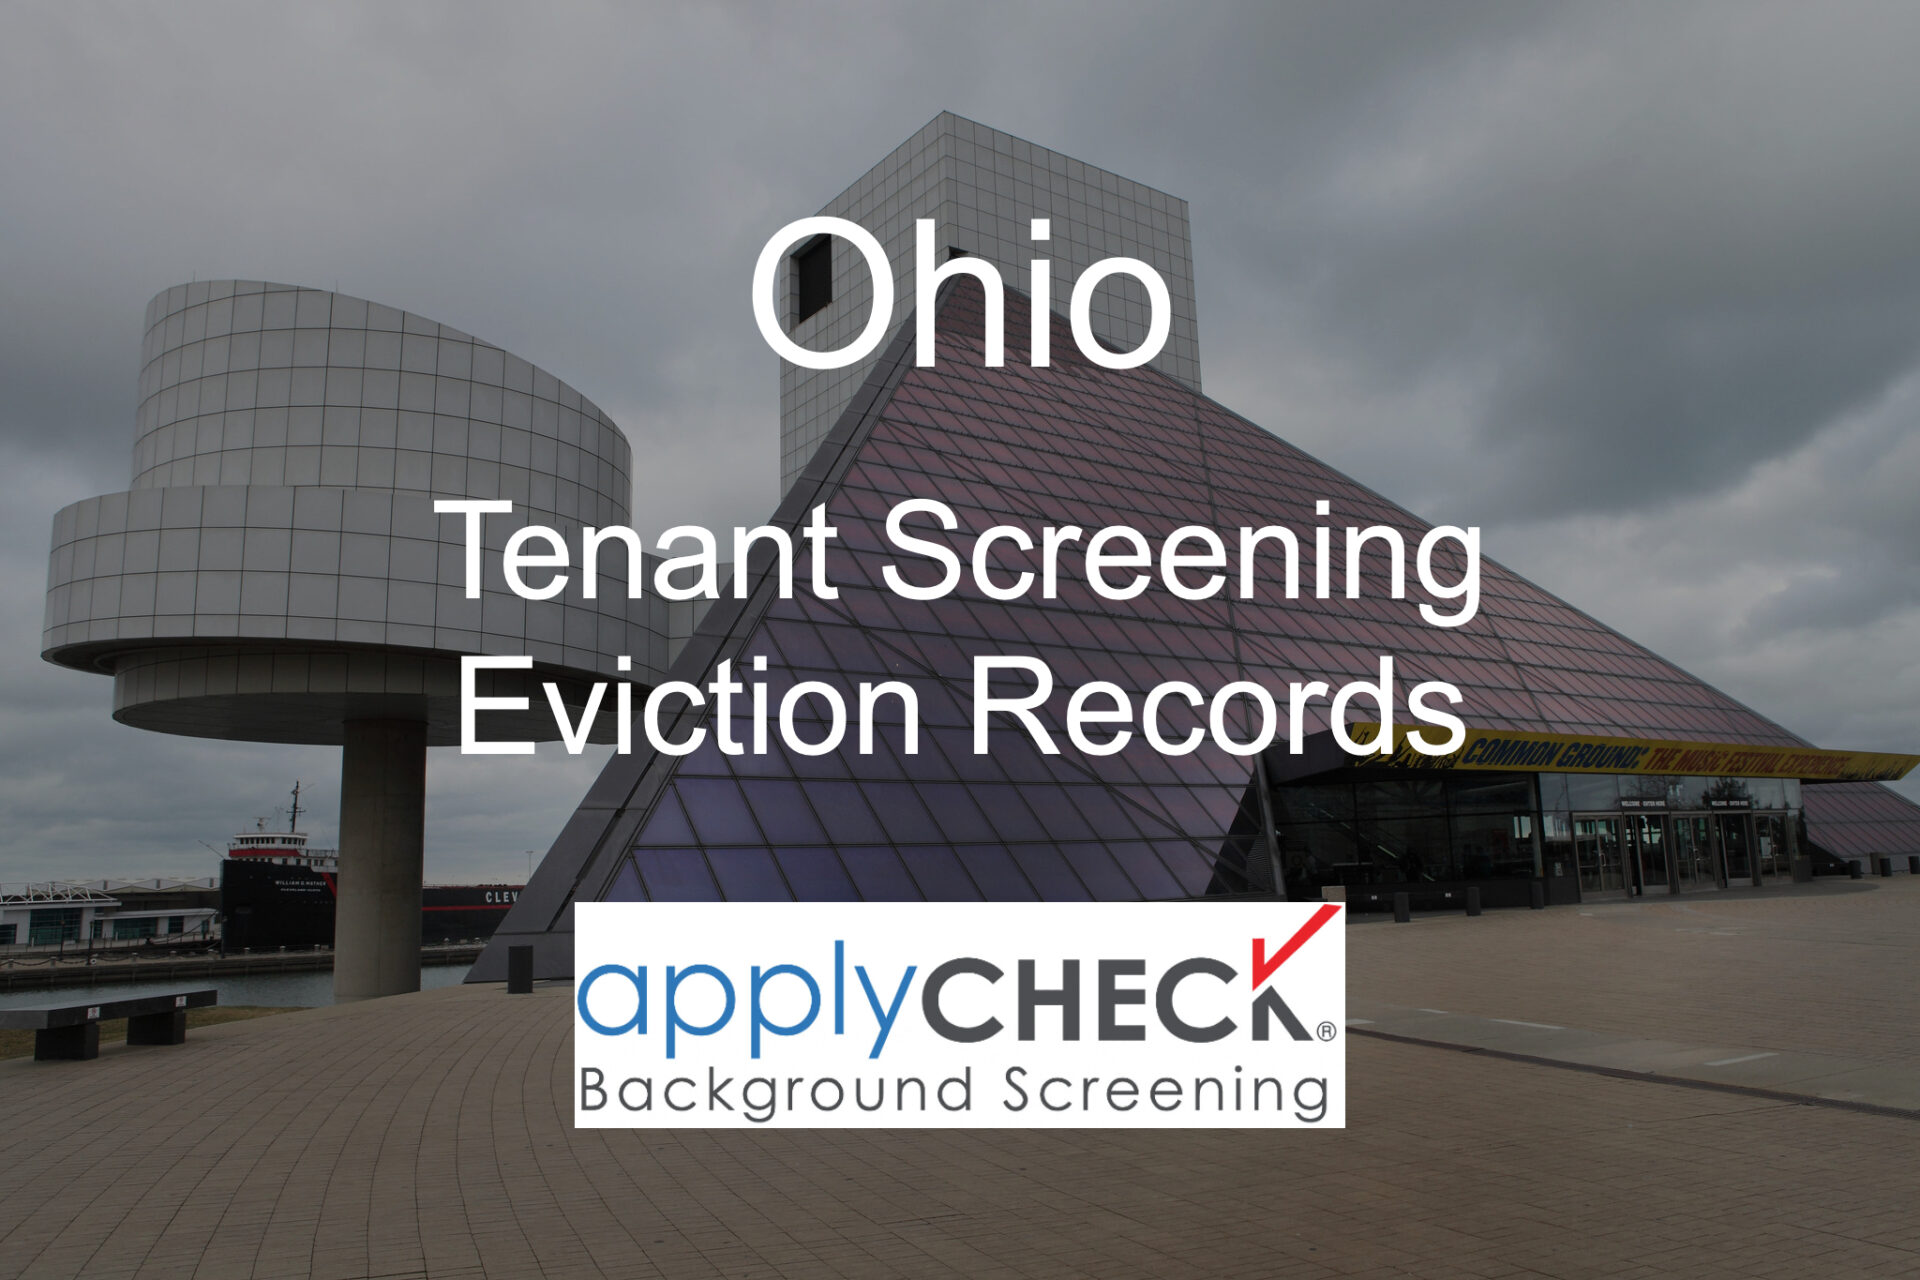 Ohio Tenant Screening and Eviction image